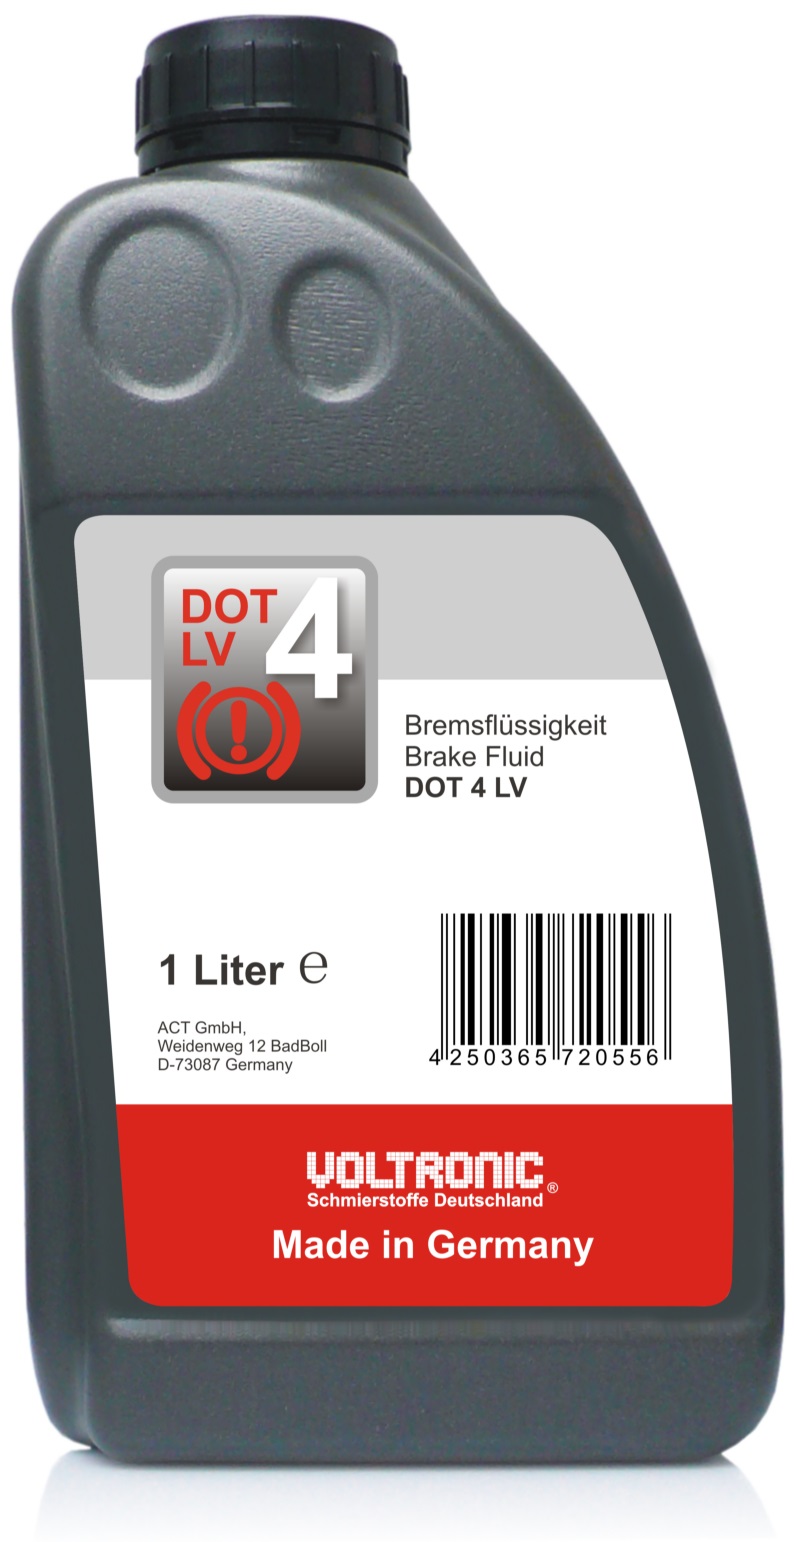 VOLTRONIC® Brake Fluid DOT 4 LV  Lubricant, Motor oil, Additive